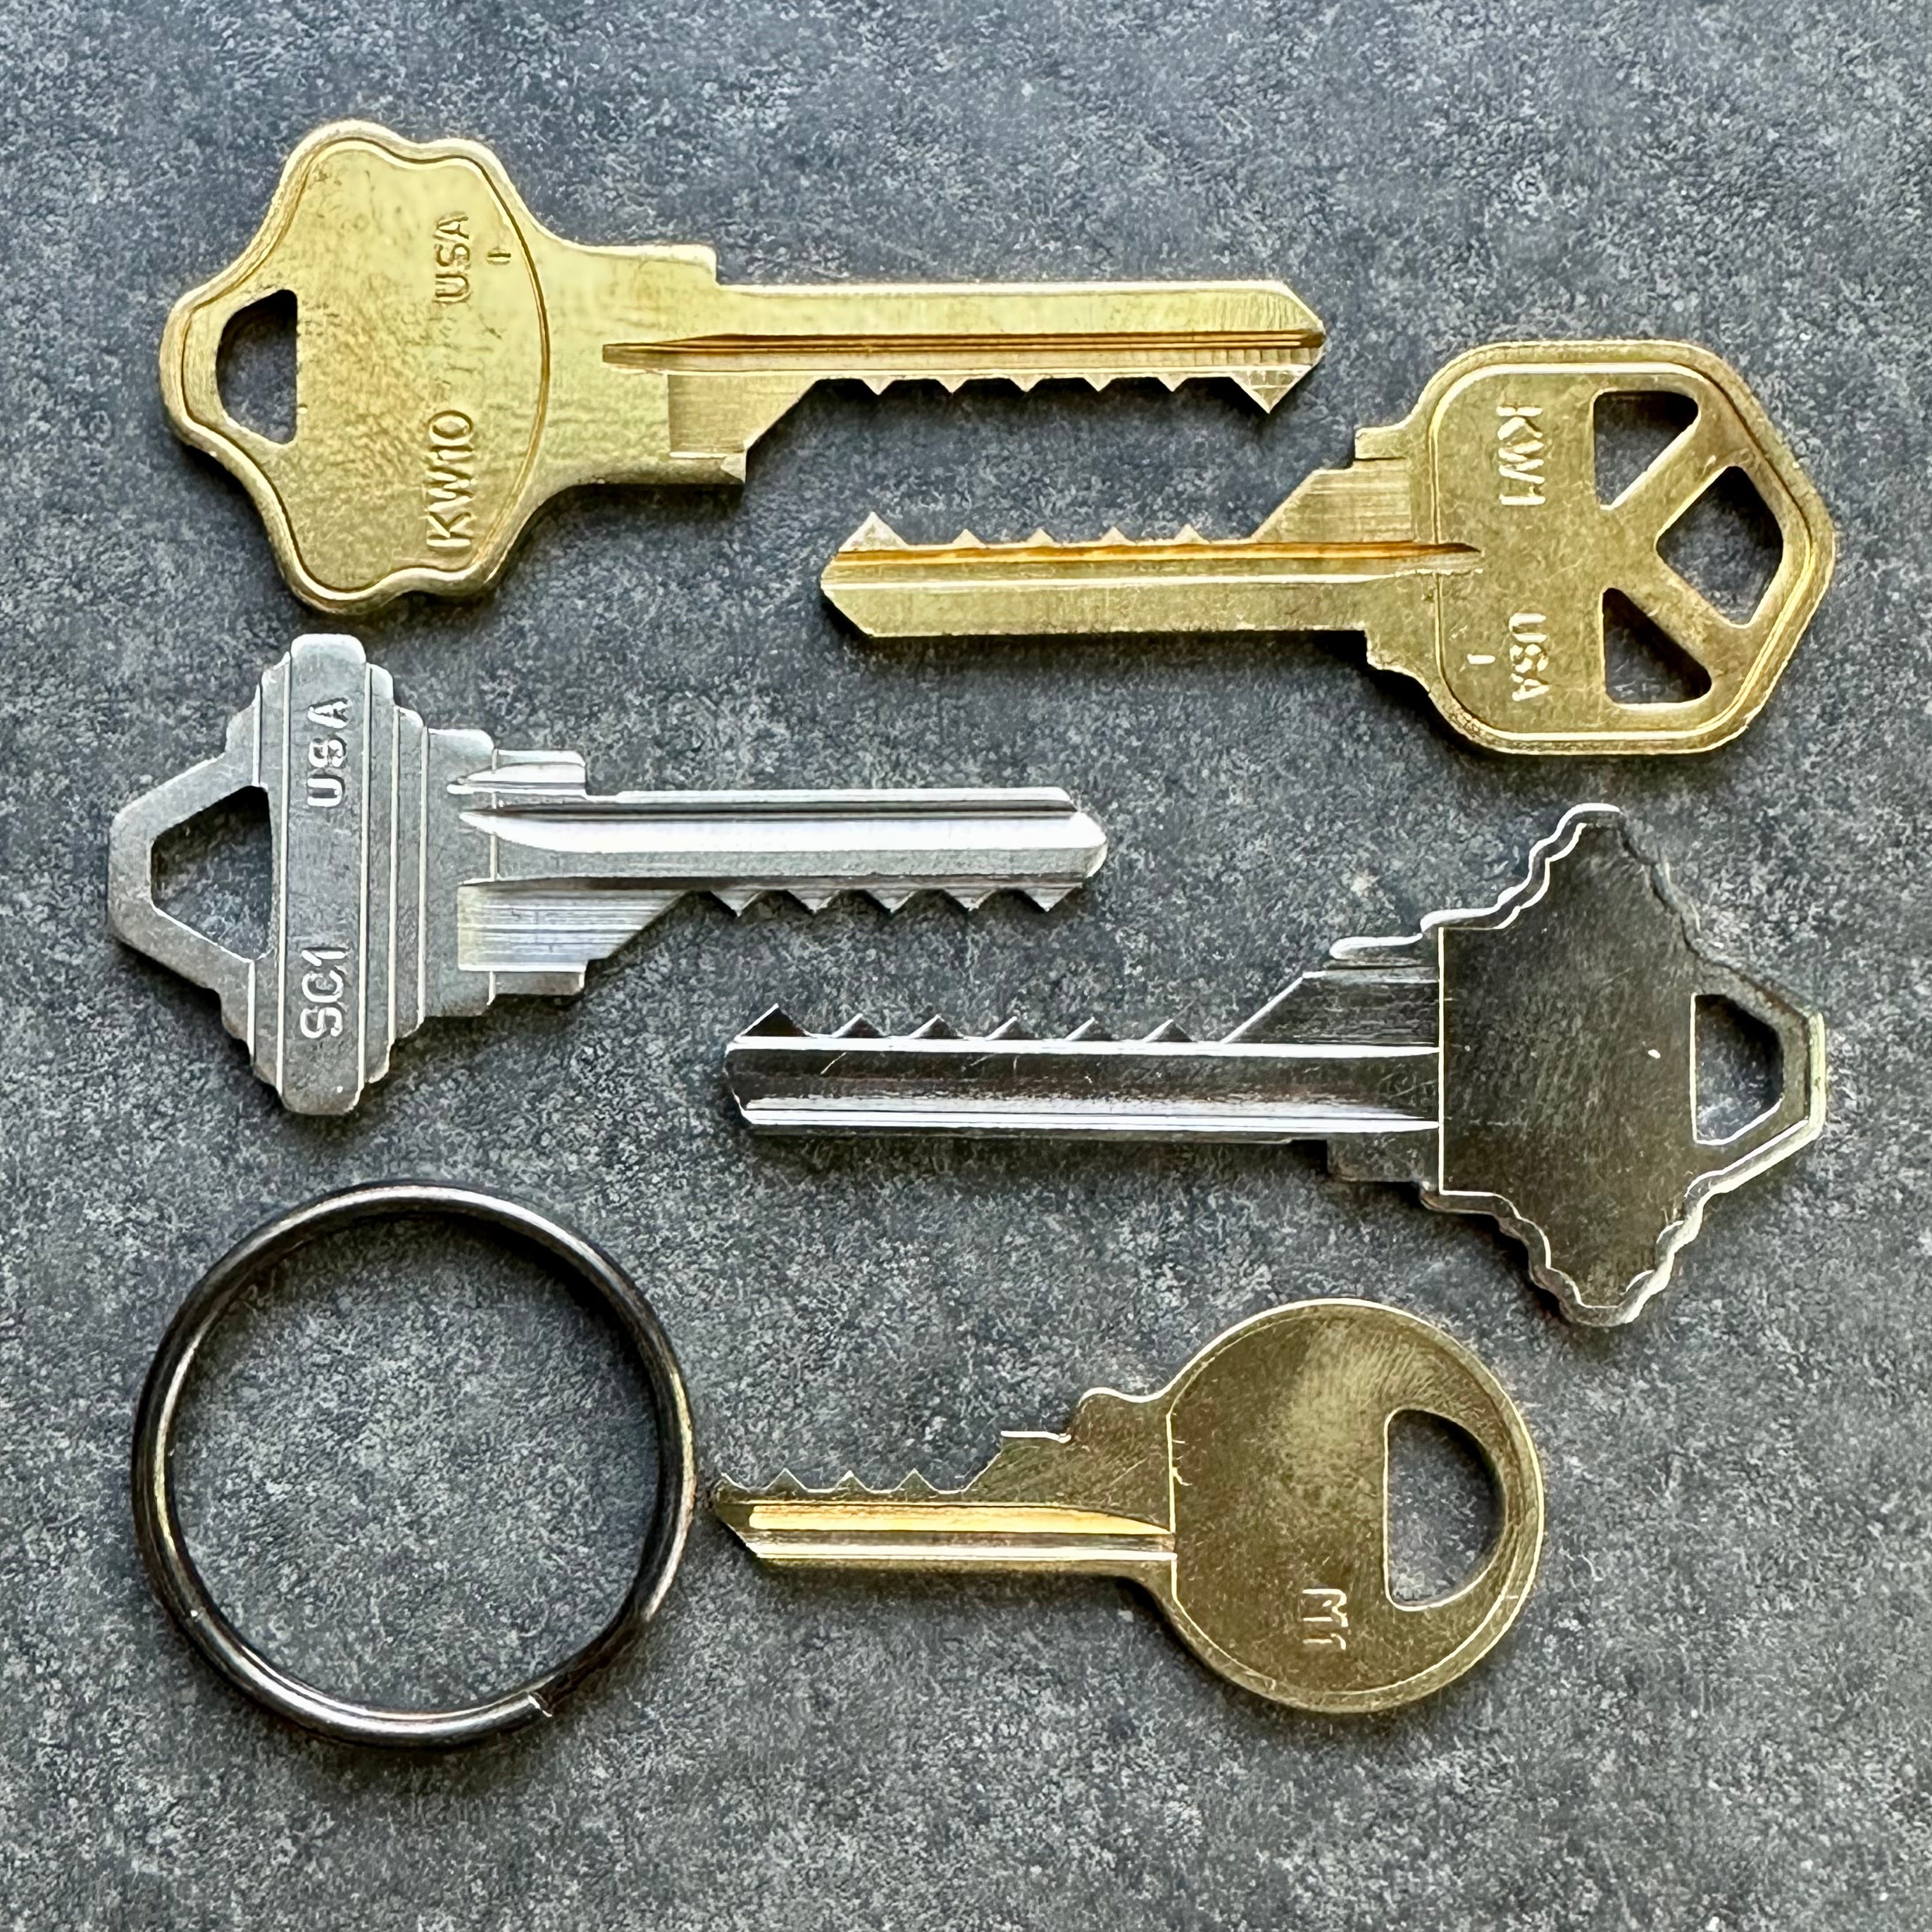 Bump Keys 5 pk - Southern Specialties